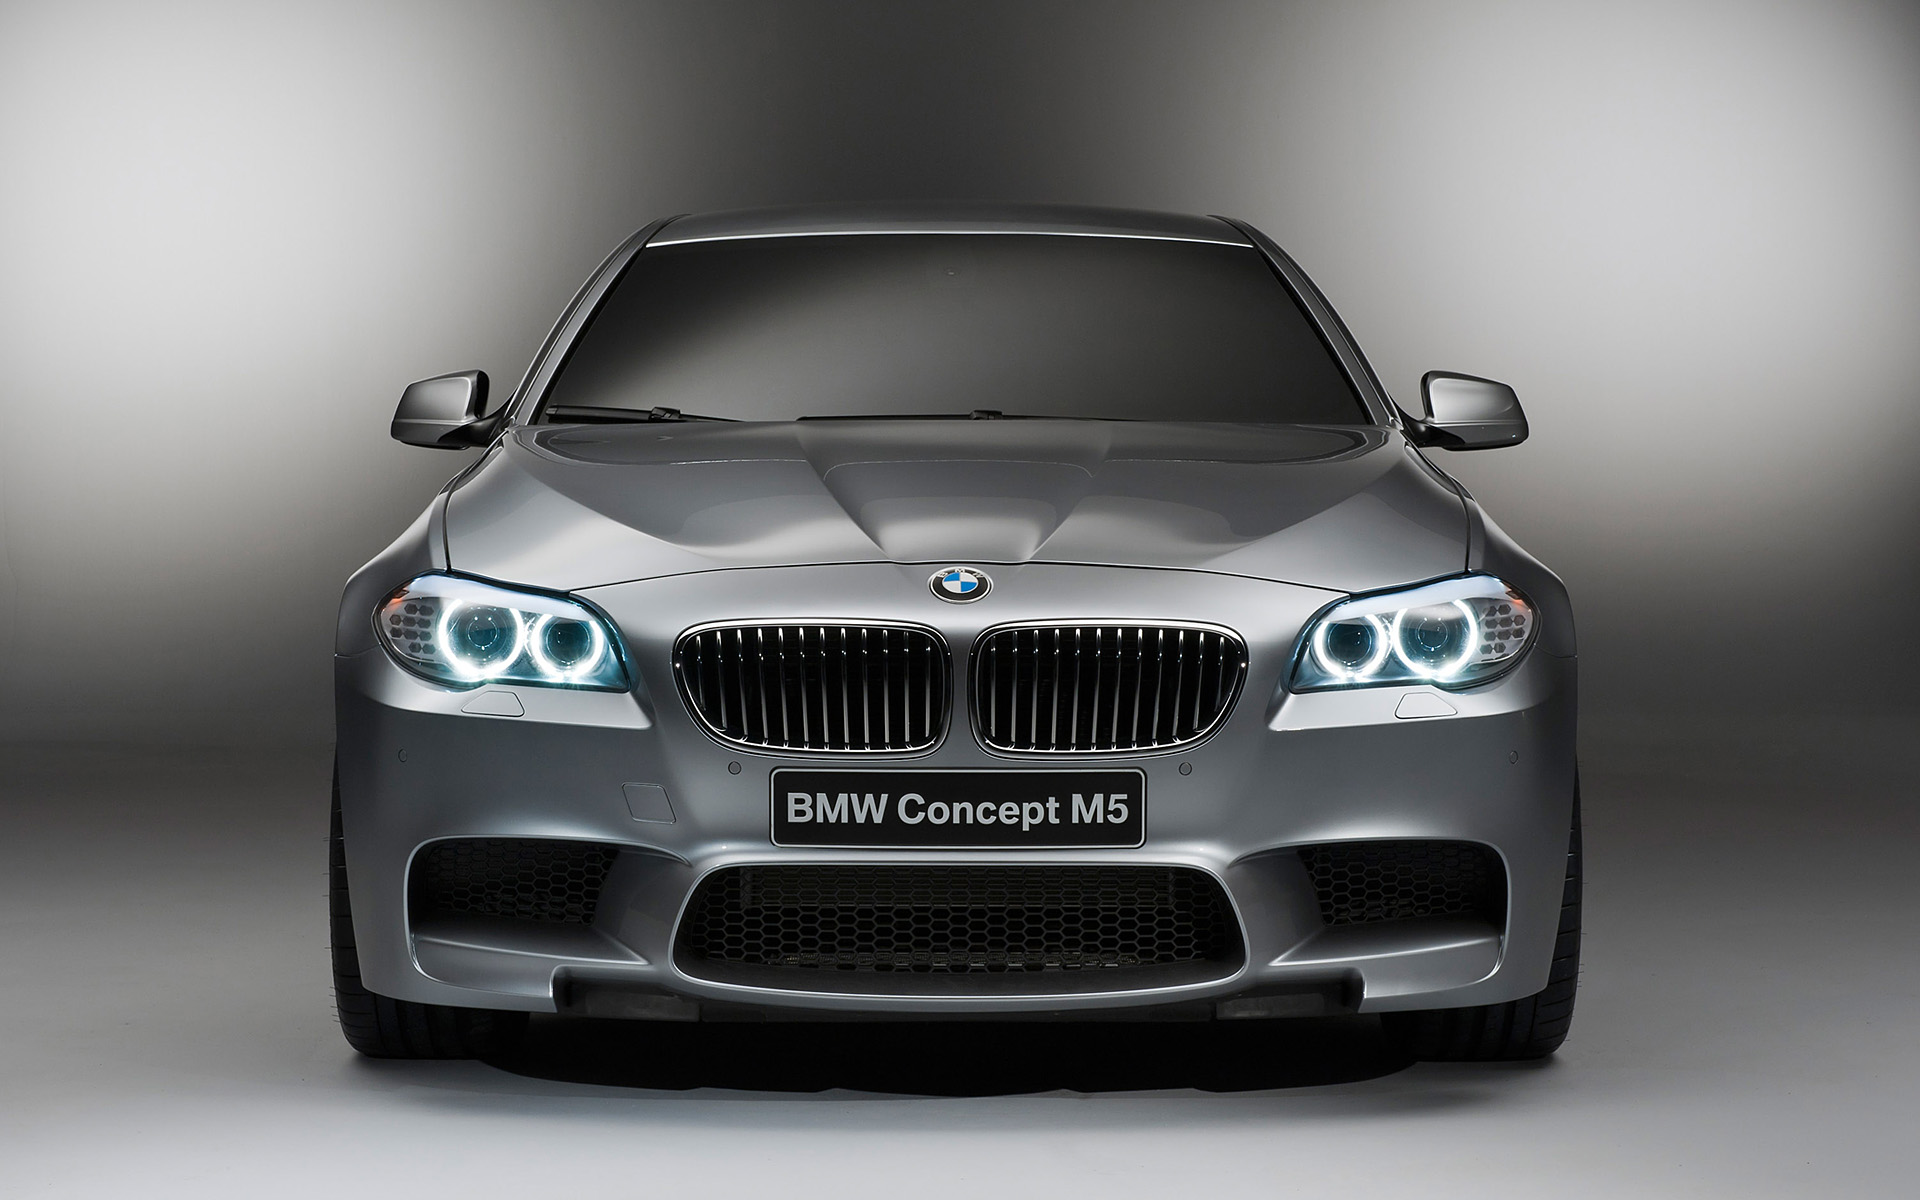  2011 BMW M5 Concept Wallpaper.